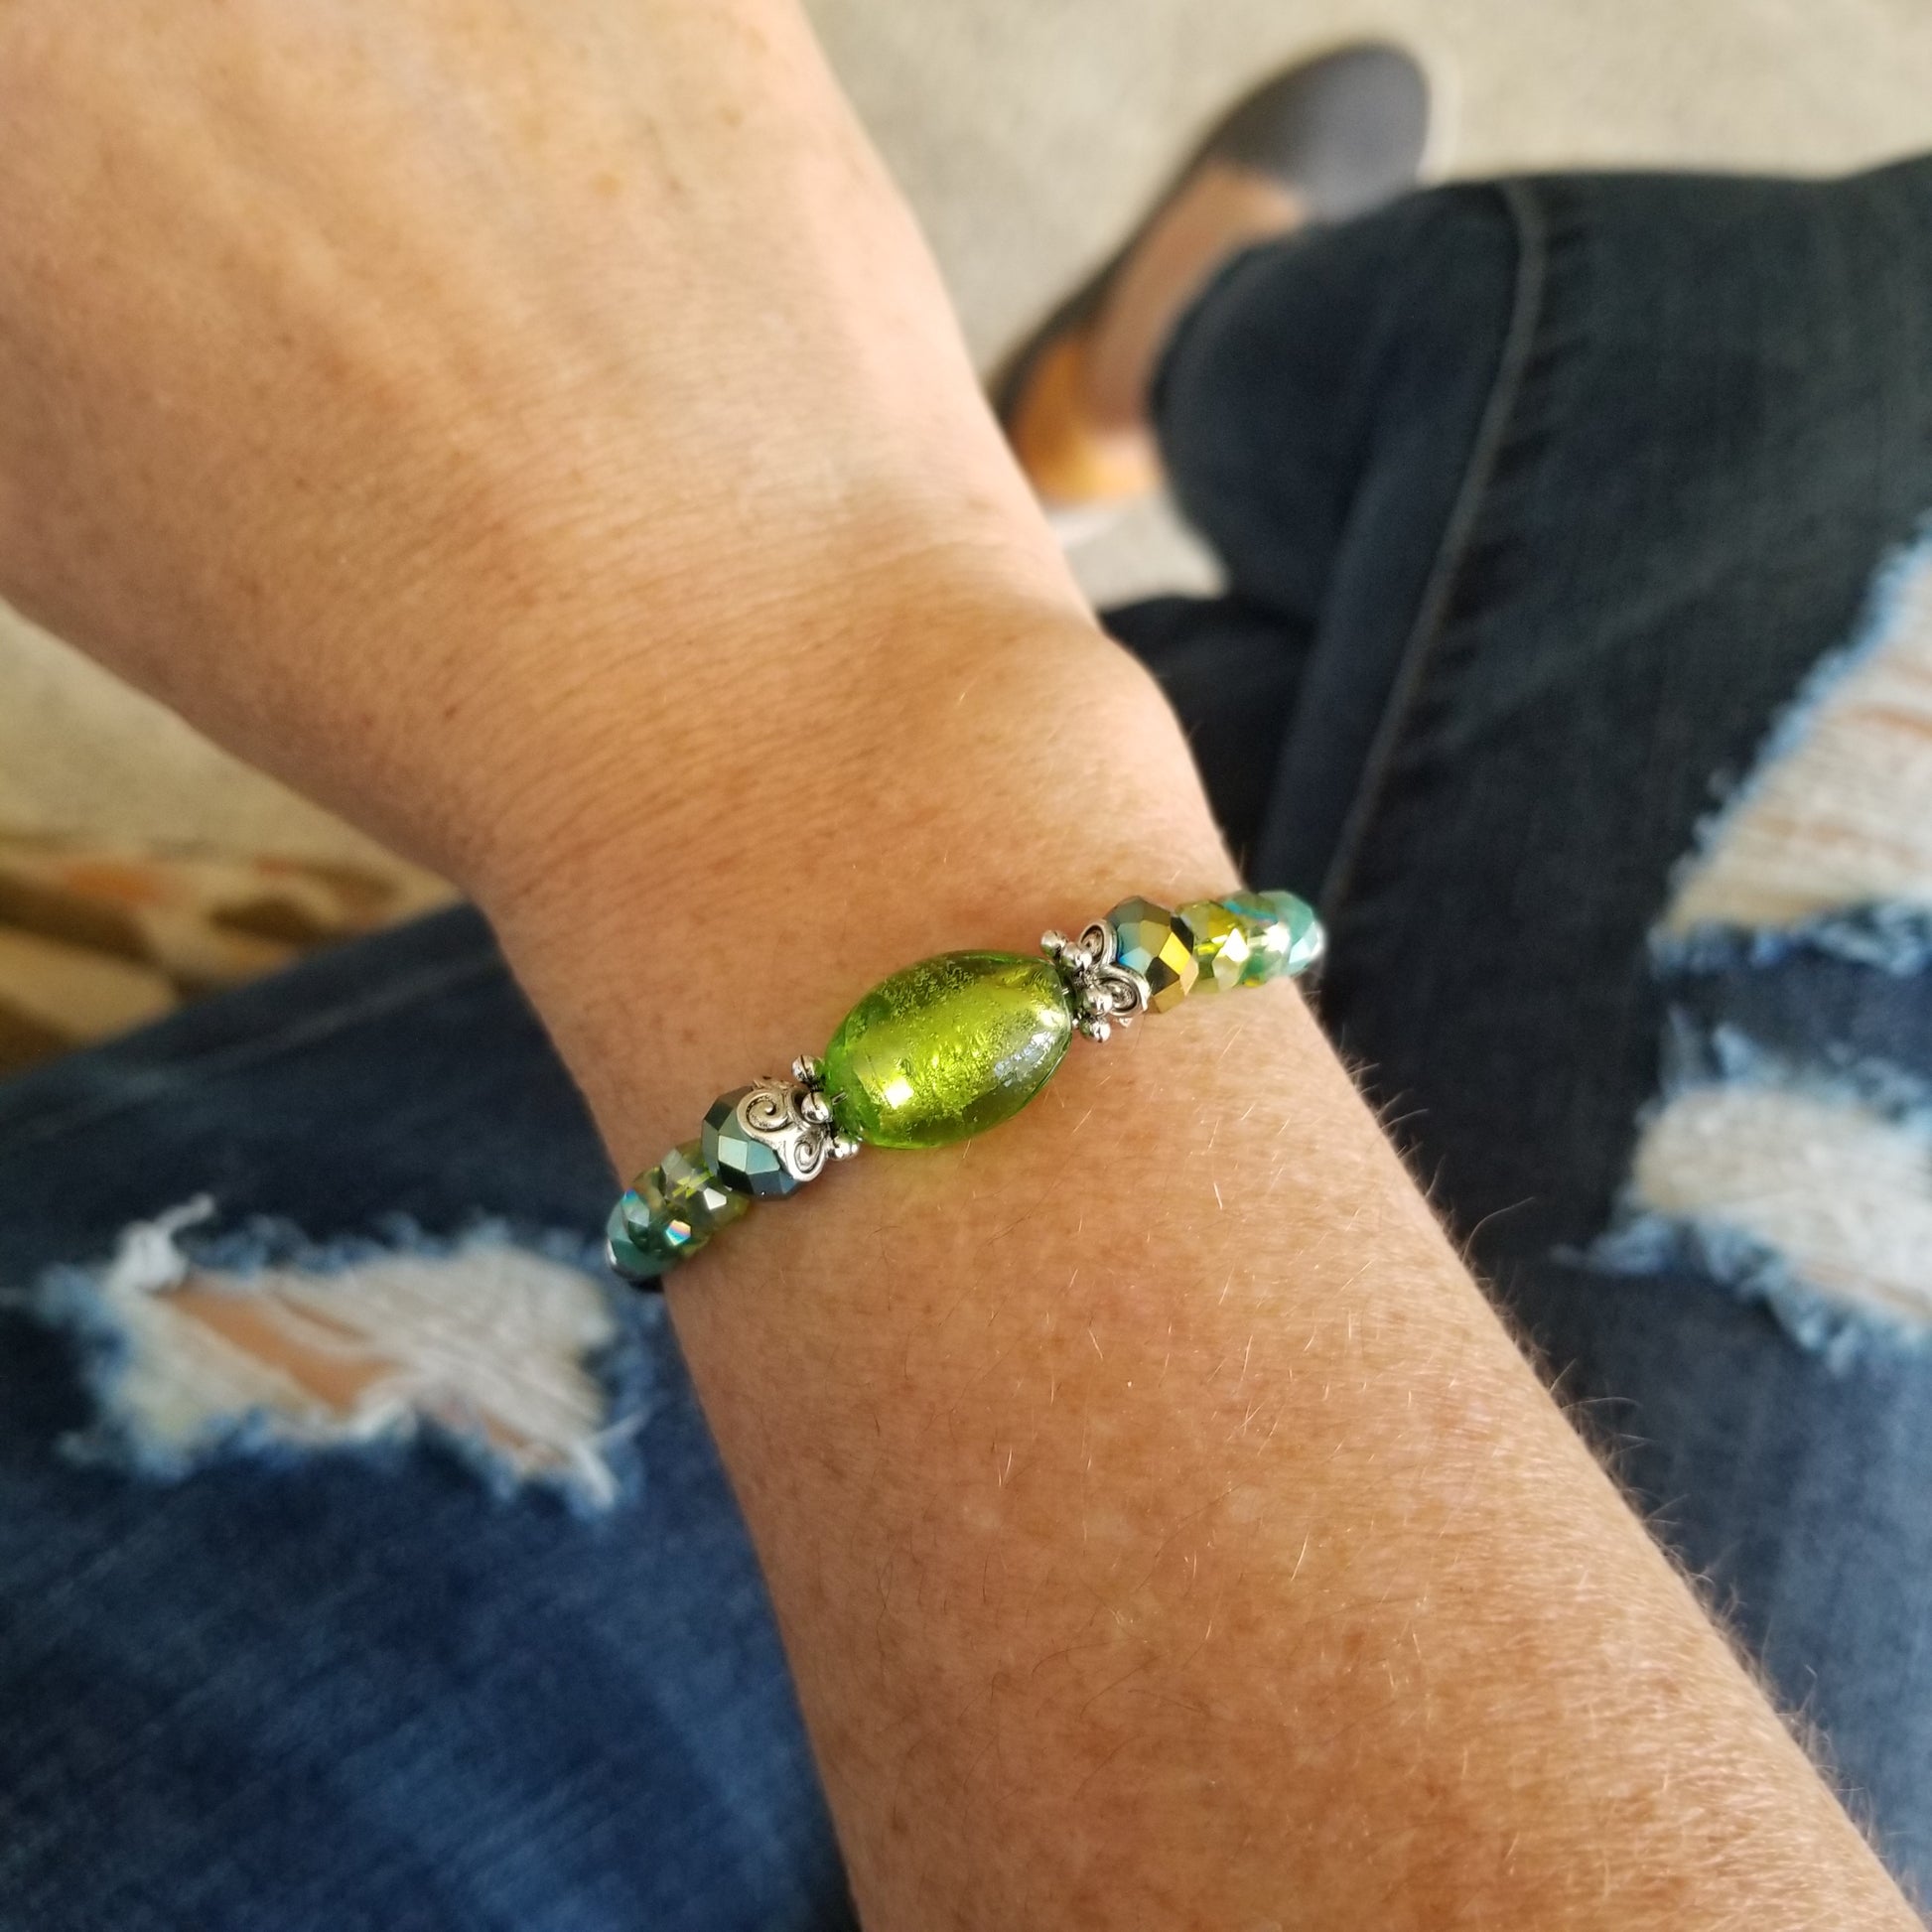 Wrap Bracelet - bright green glass over foil center bead with mix green iris and aqua glass beads